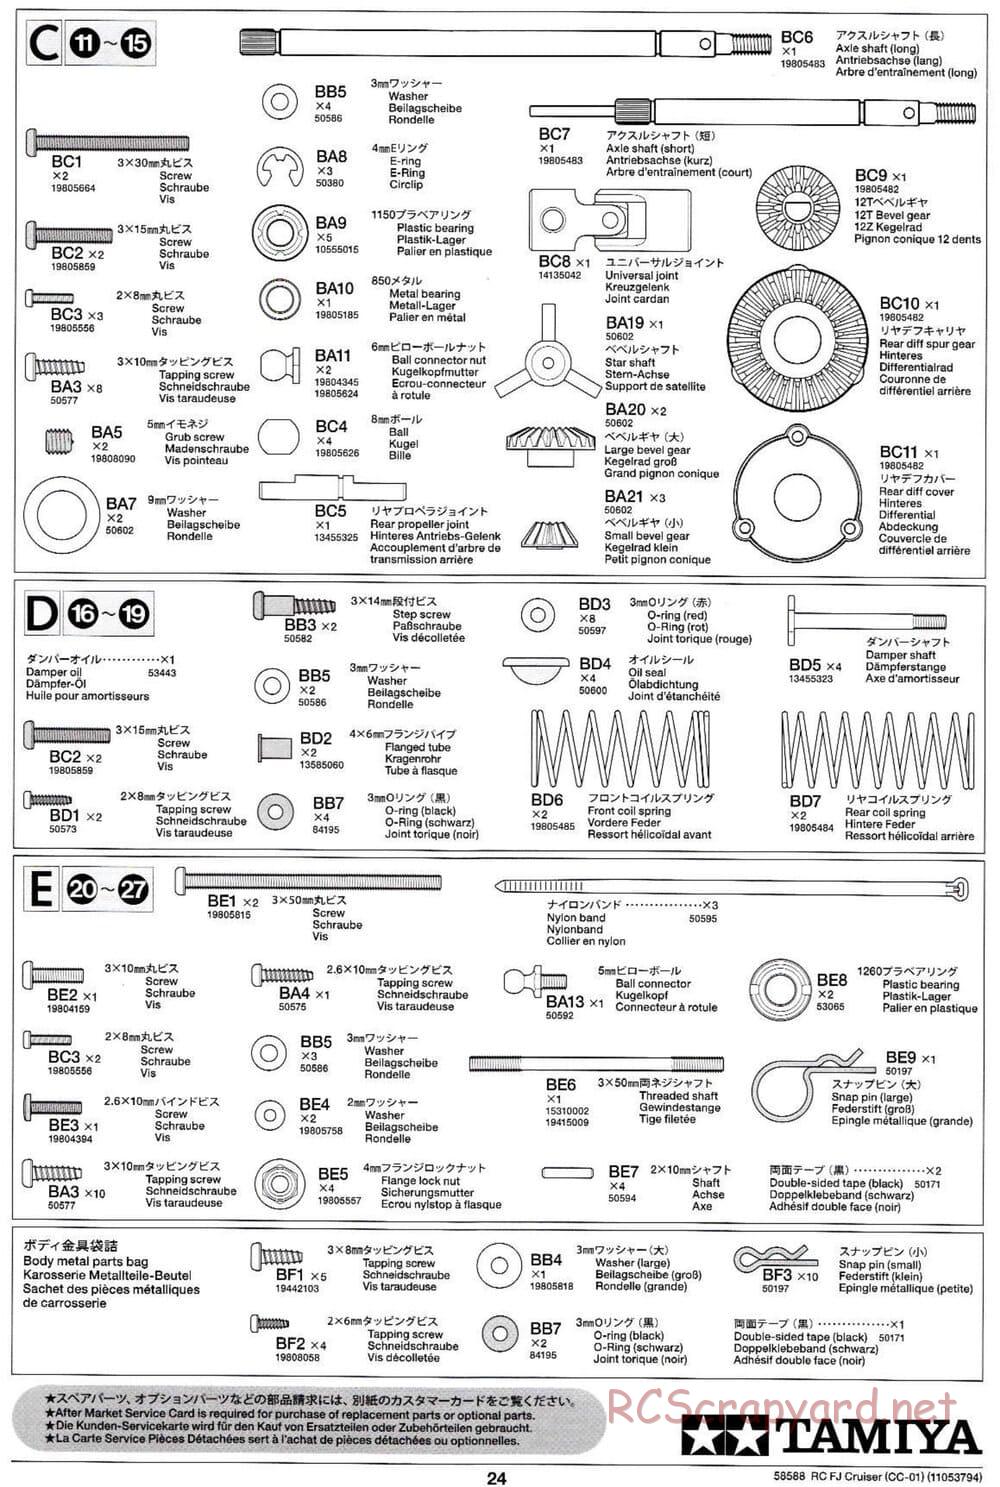 Tamiya - Toyota FJ Cruiser - CC-01 Chassis - Manual - Page 24